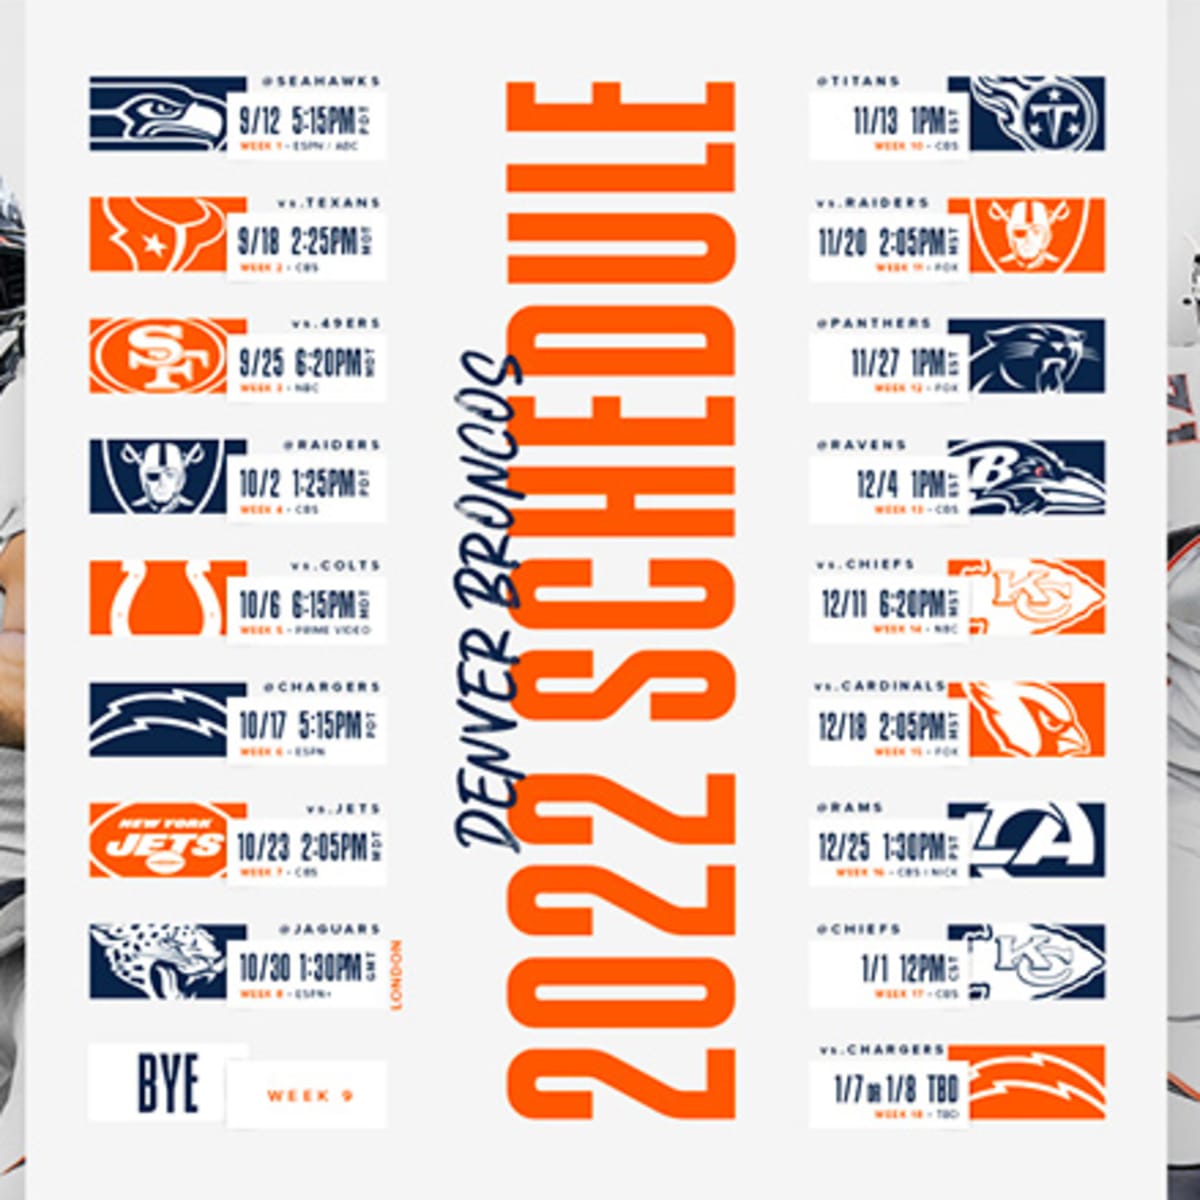 Denver Broncos schedule for 2022 NFL season - College Football HQ